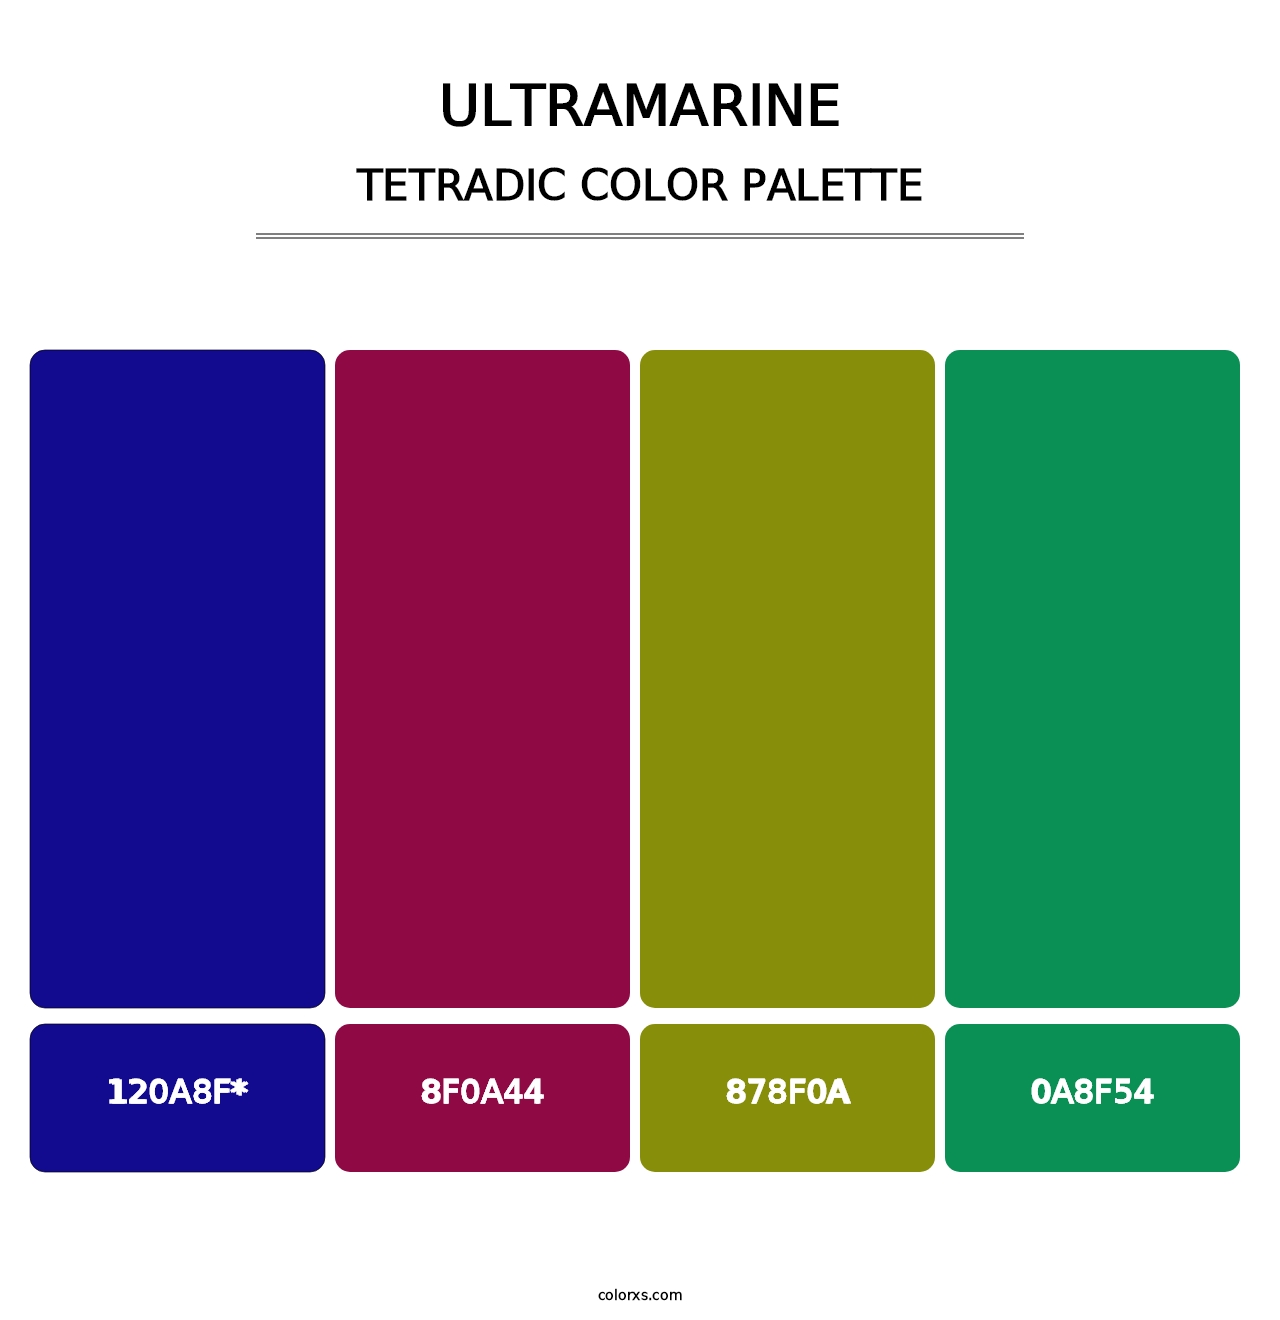 Ultramarine - Tetradic Color Palette